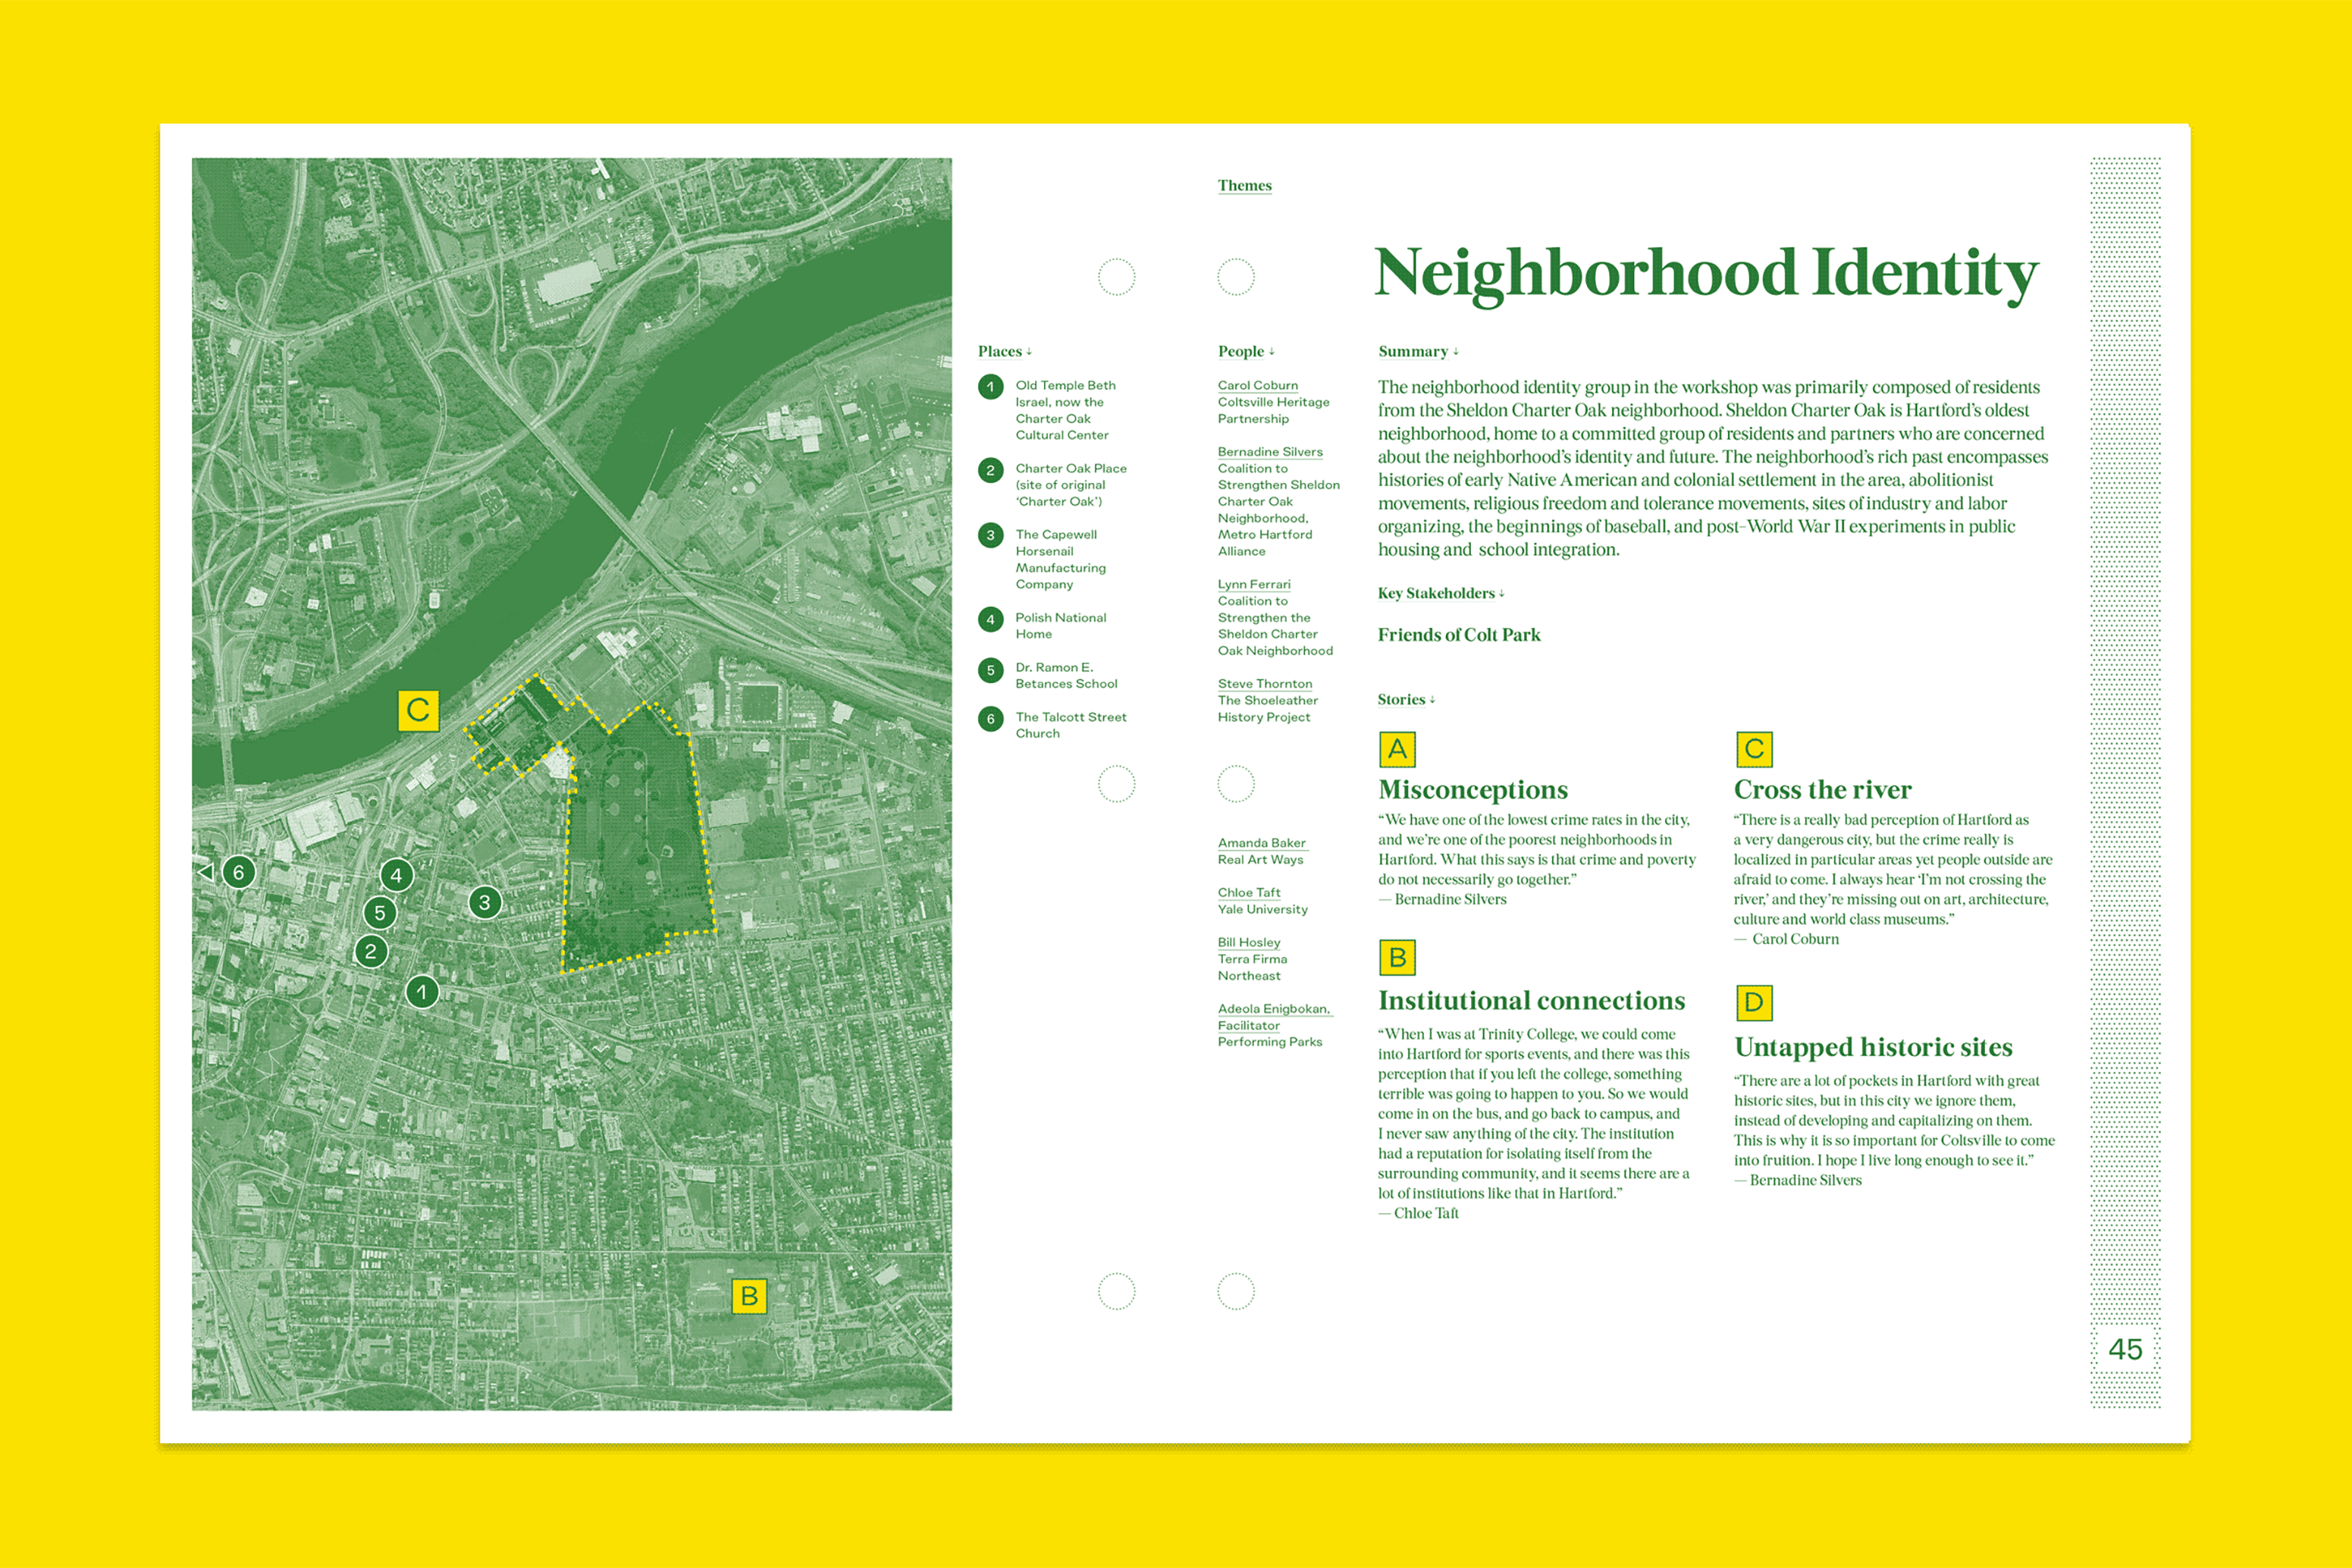 Next Park Neighborhood Identity